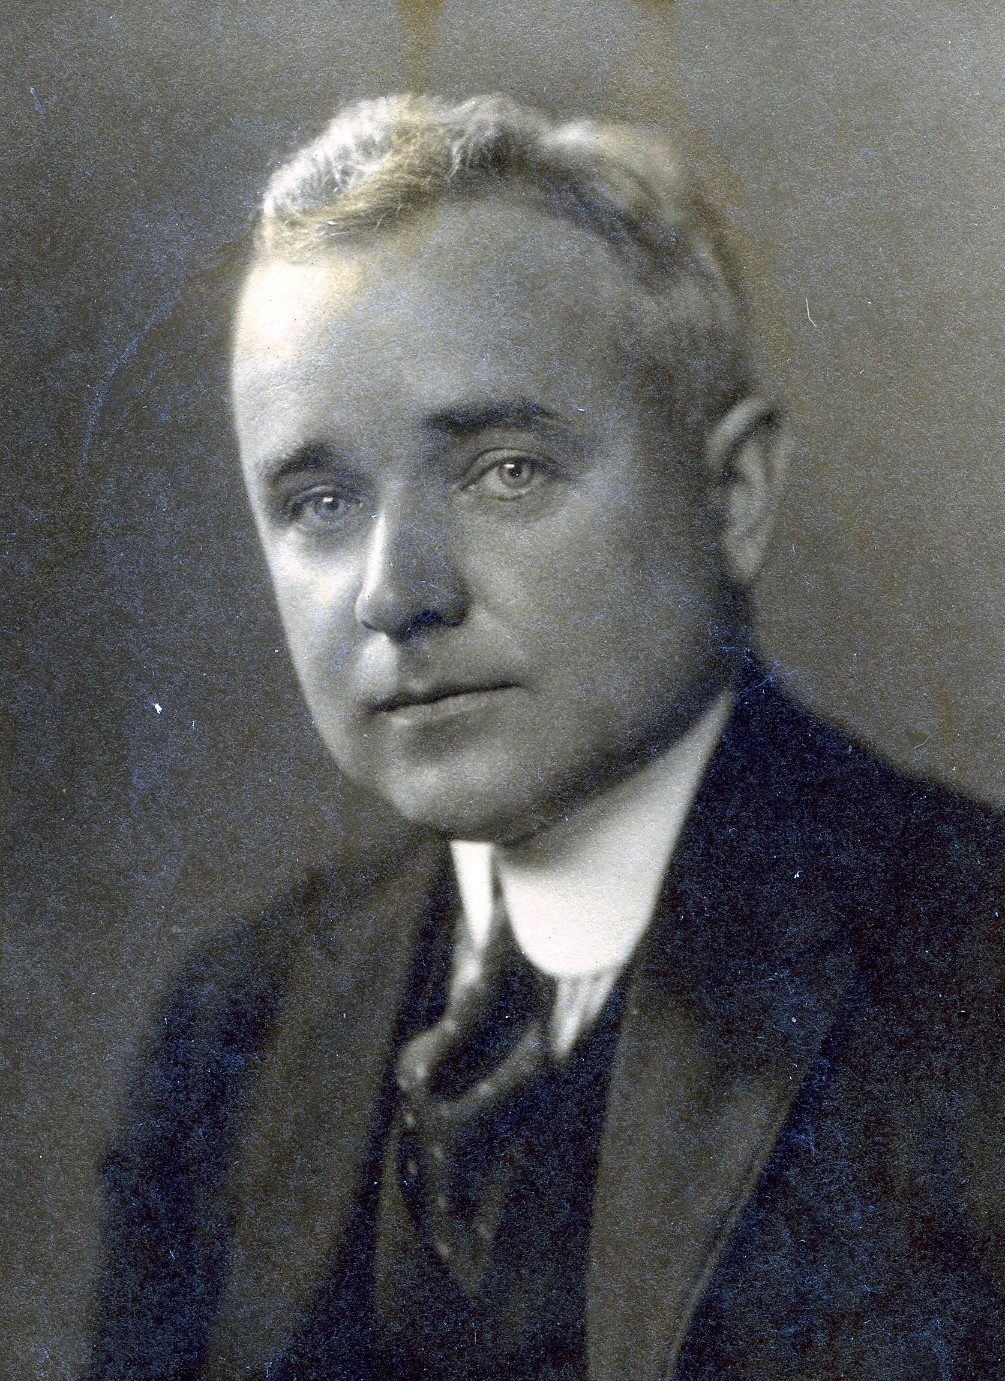 Member portrait of Thomas I. Parkinson